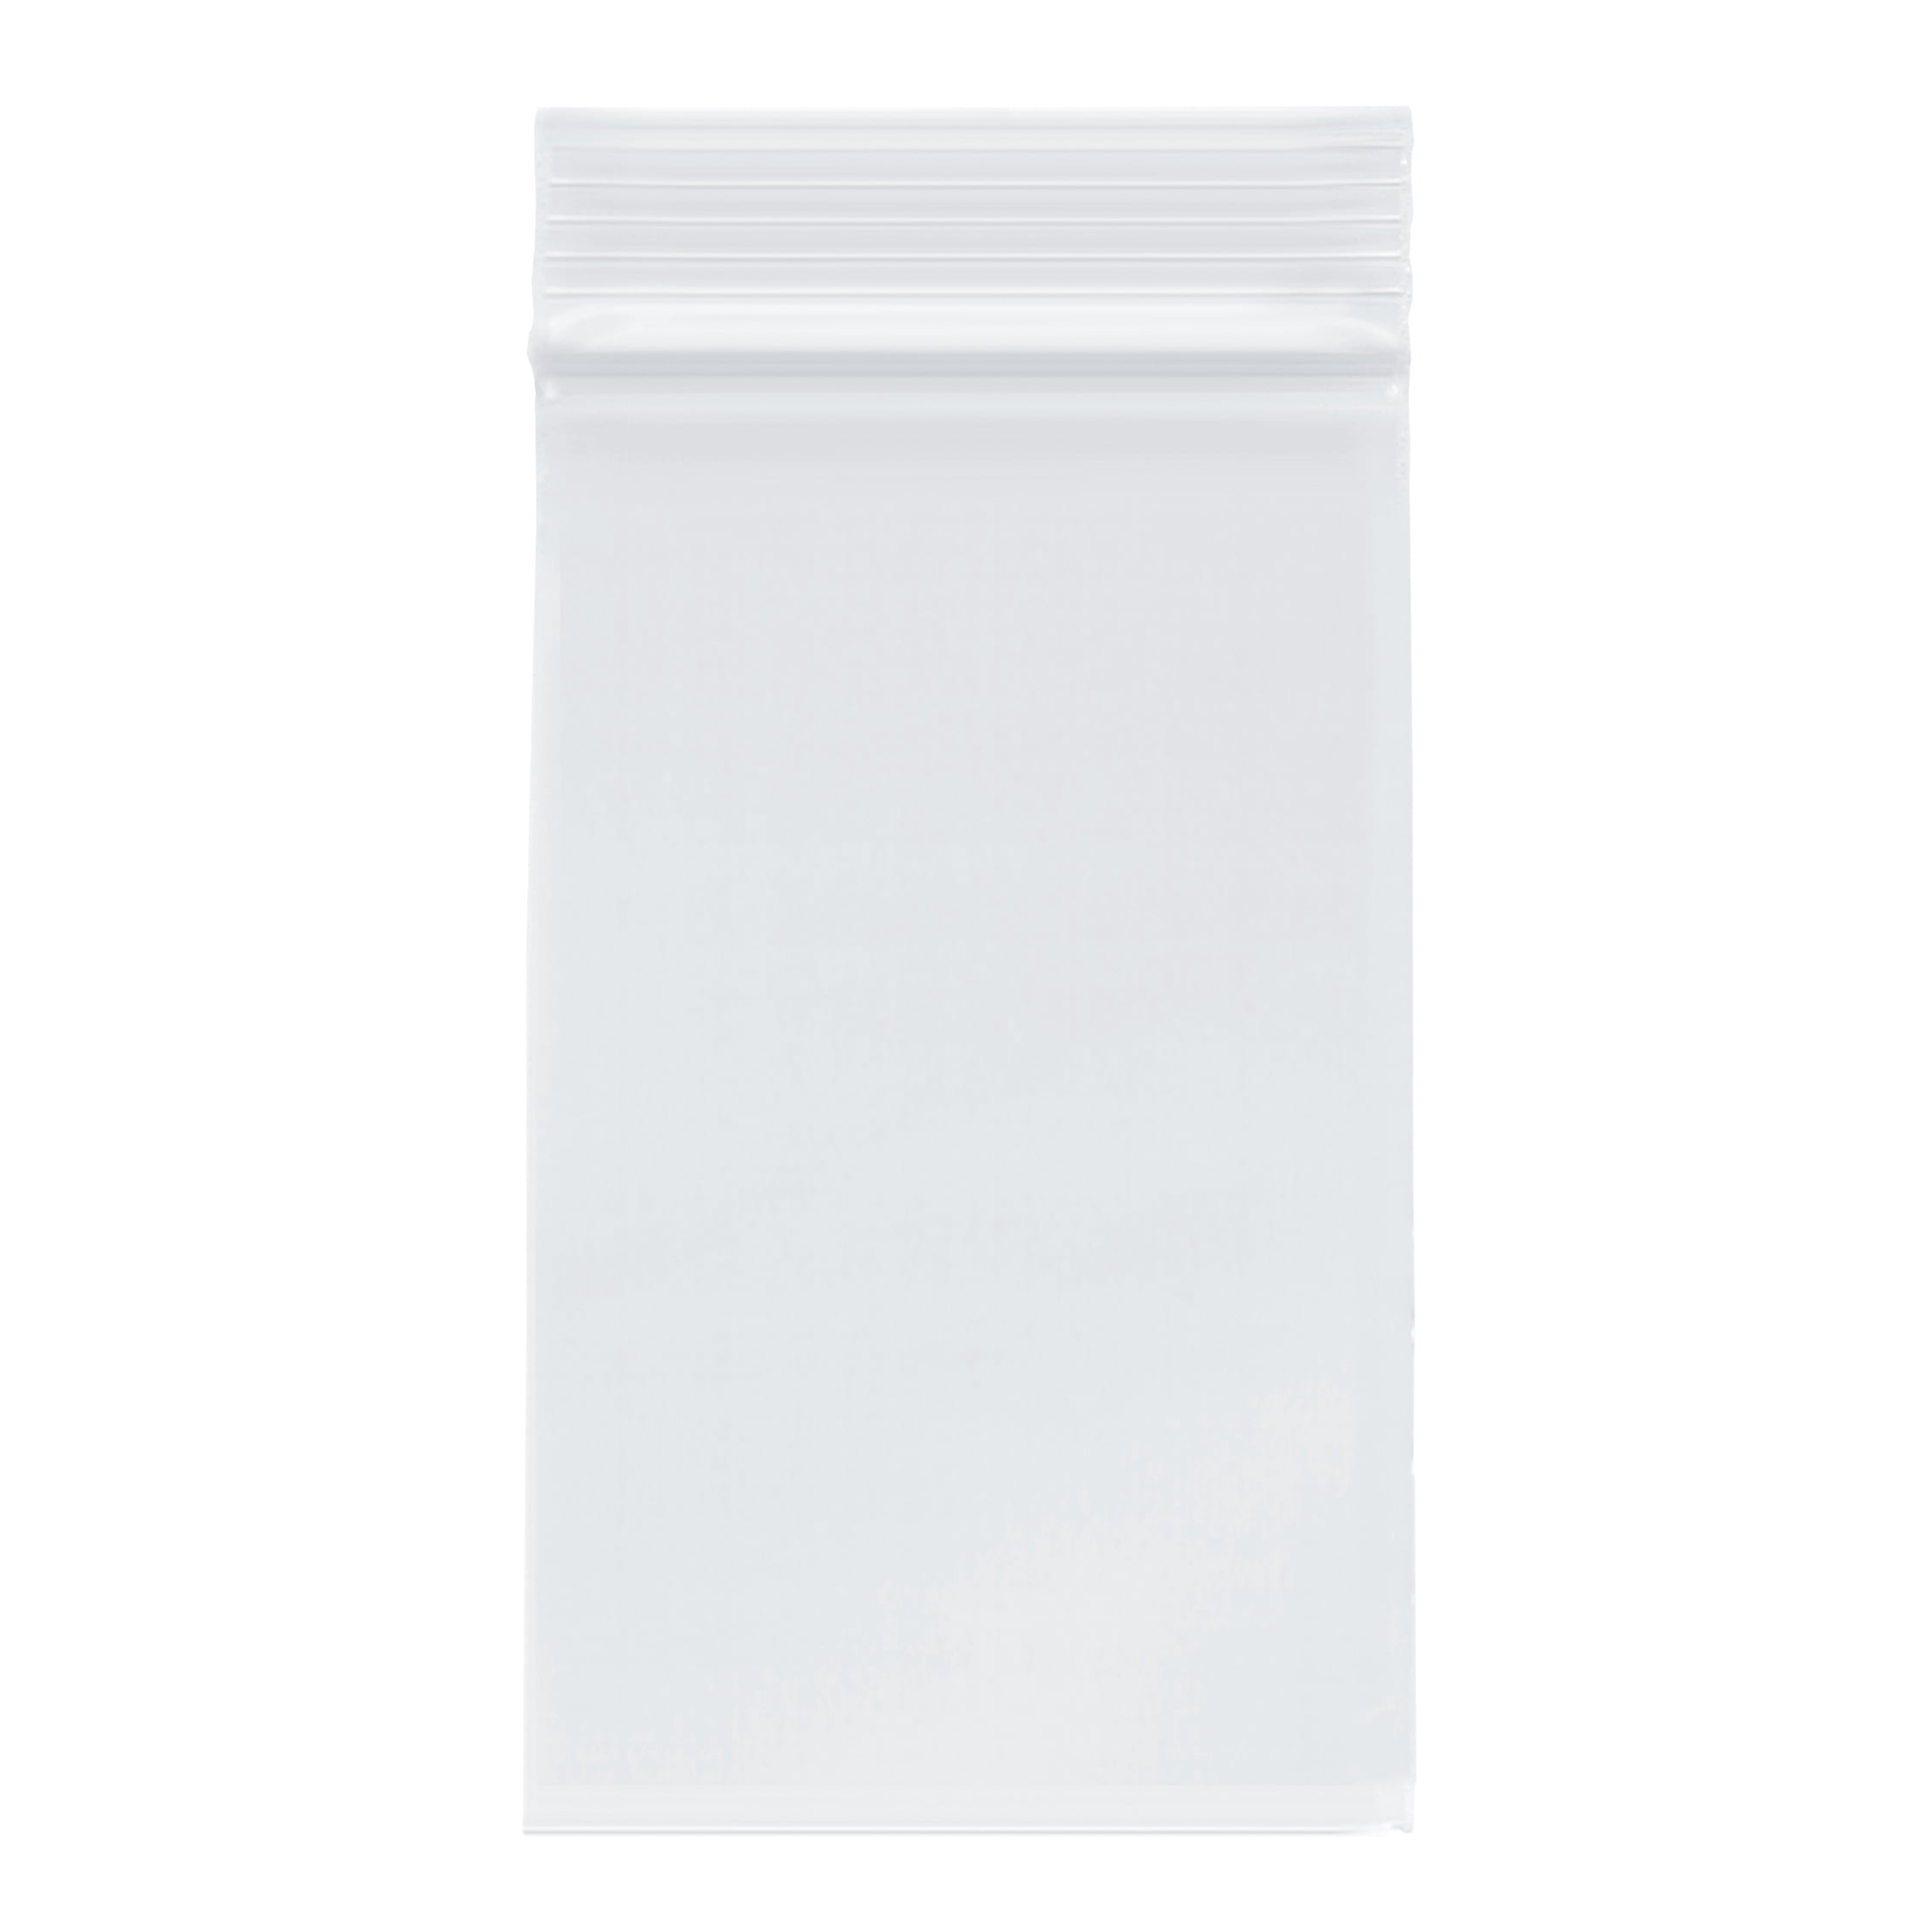 Plymor Zipper Reclosable Plastic Bags 2 Mil Pack of 500 3/" x 3/"